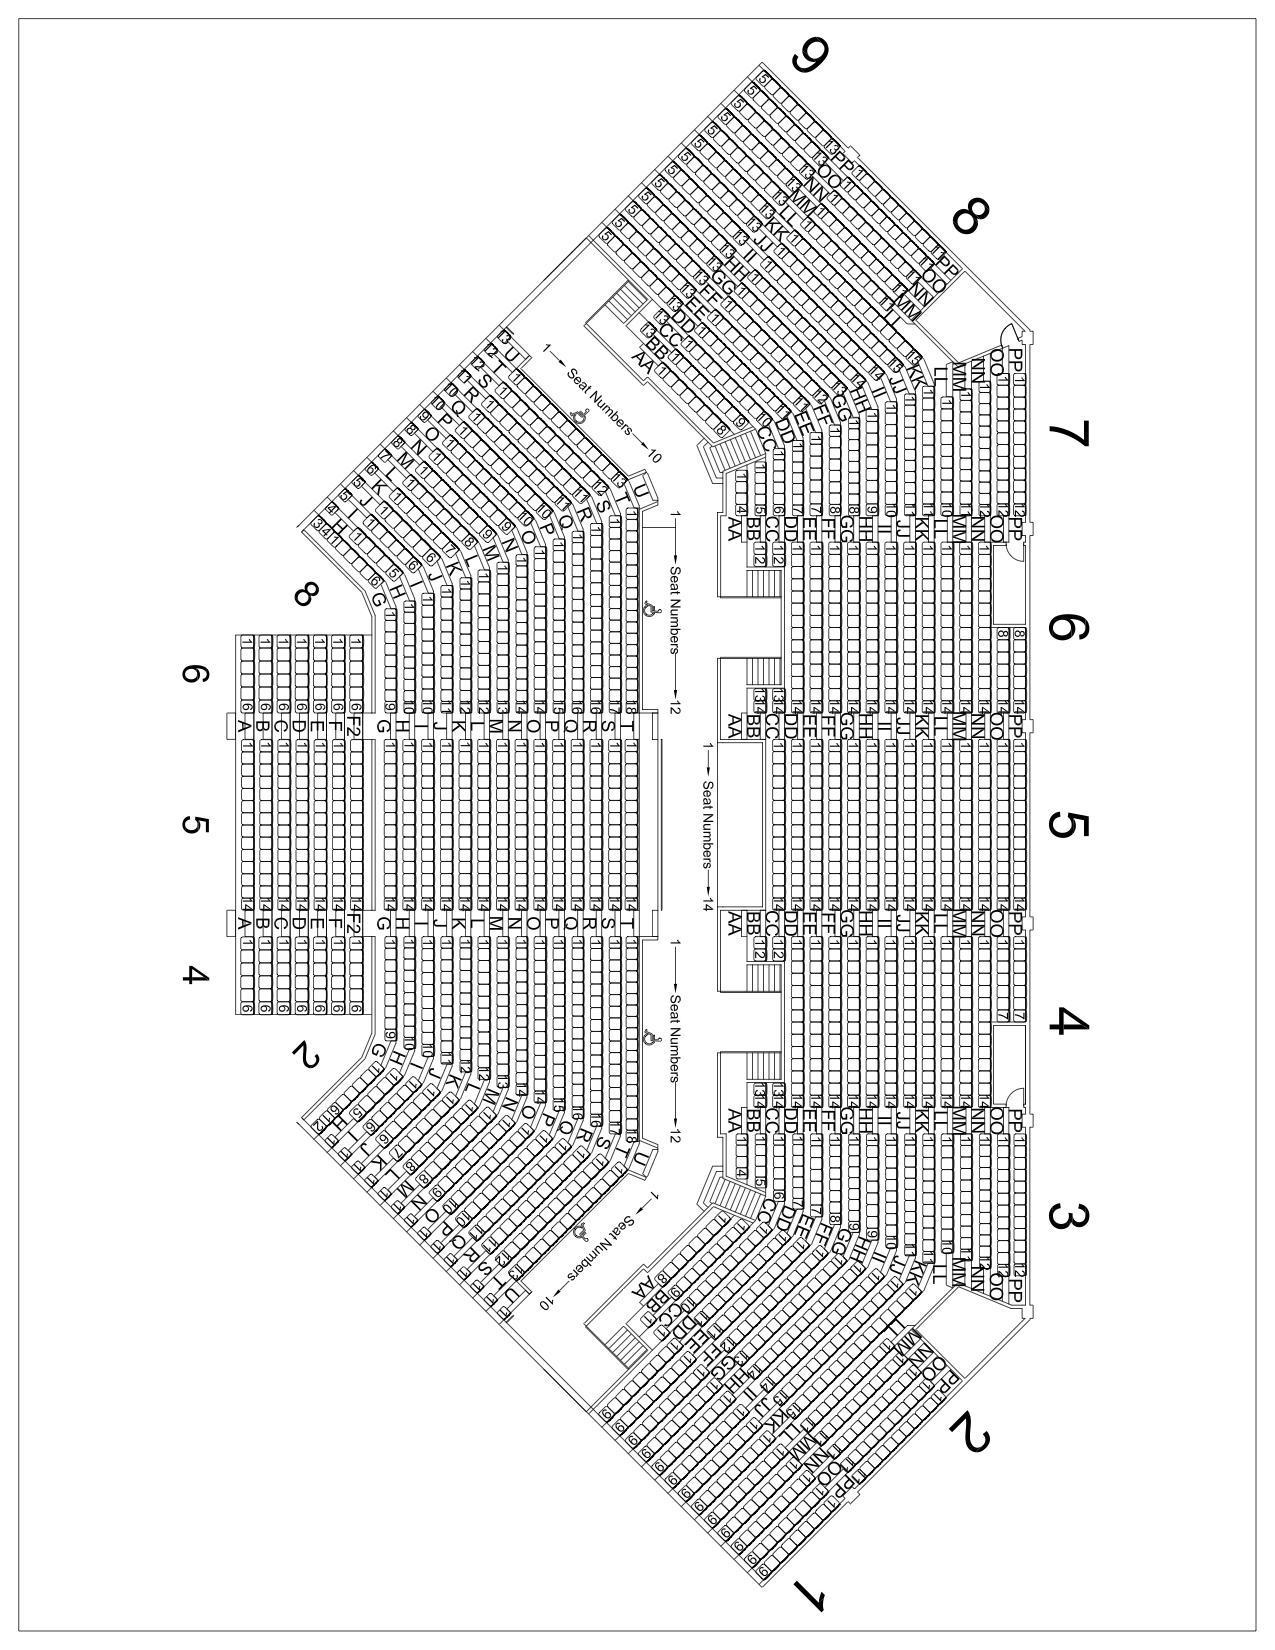 Wsu Seating Chart